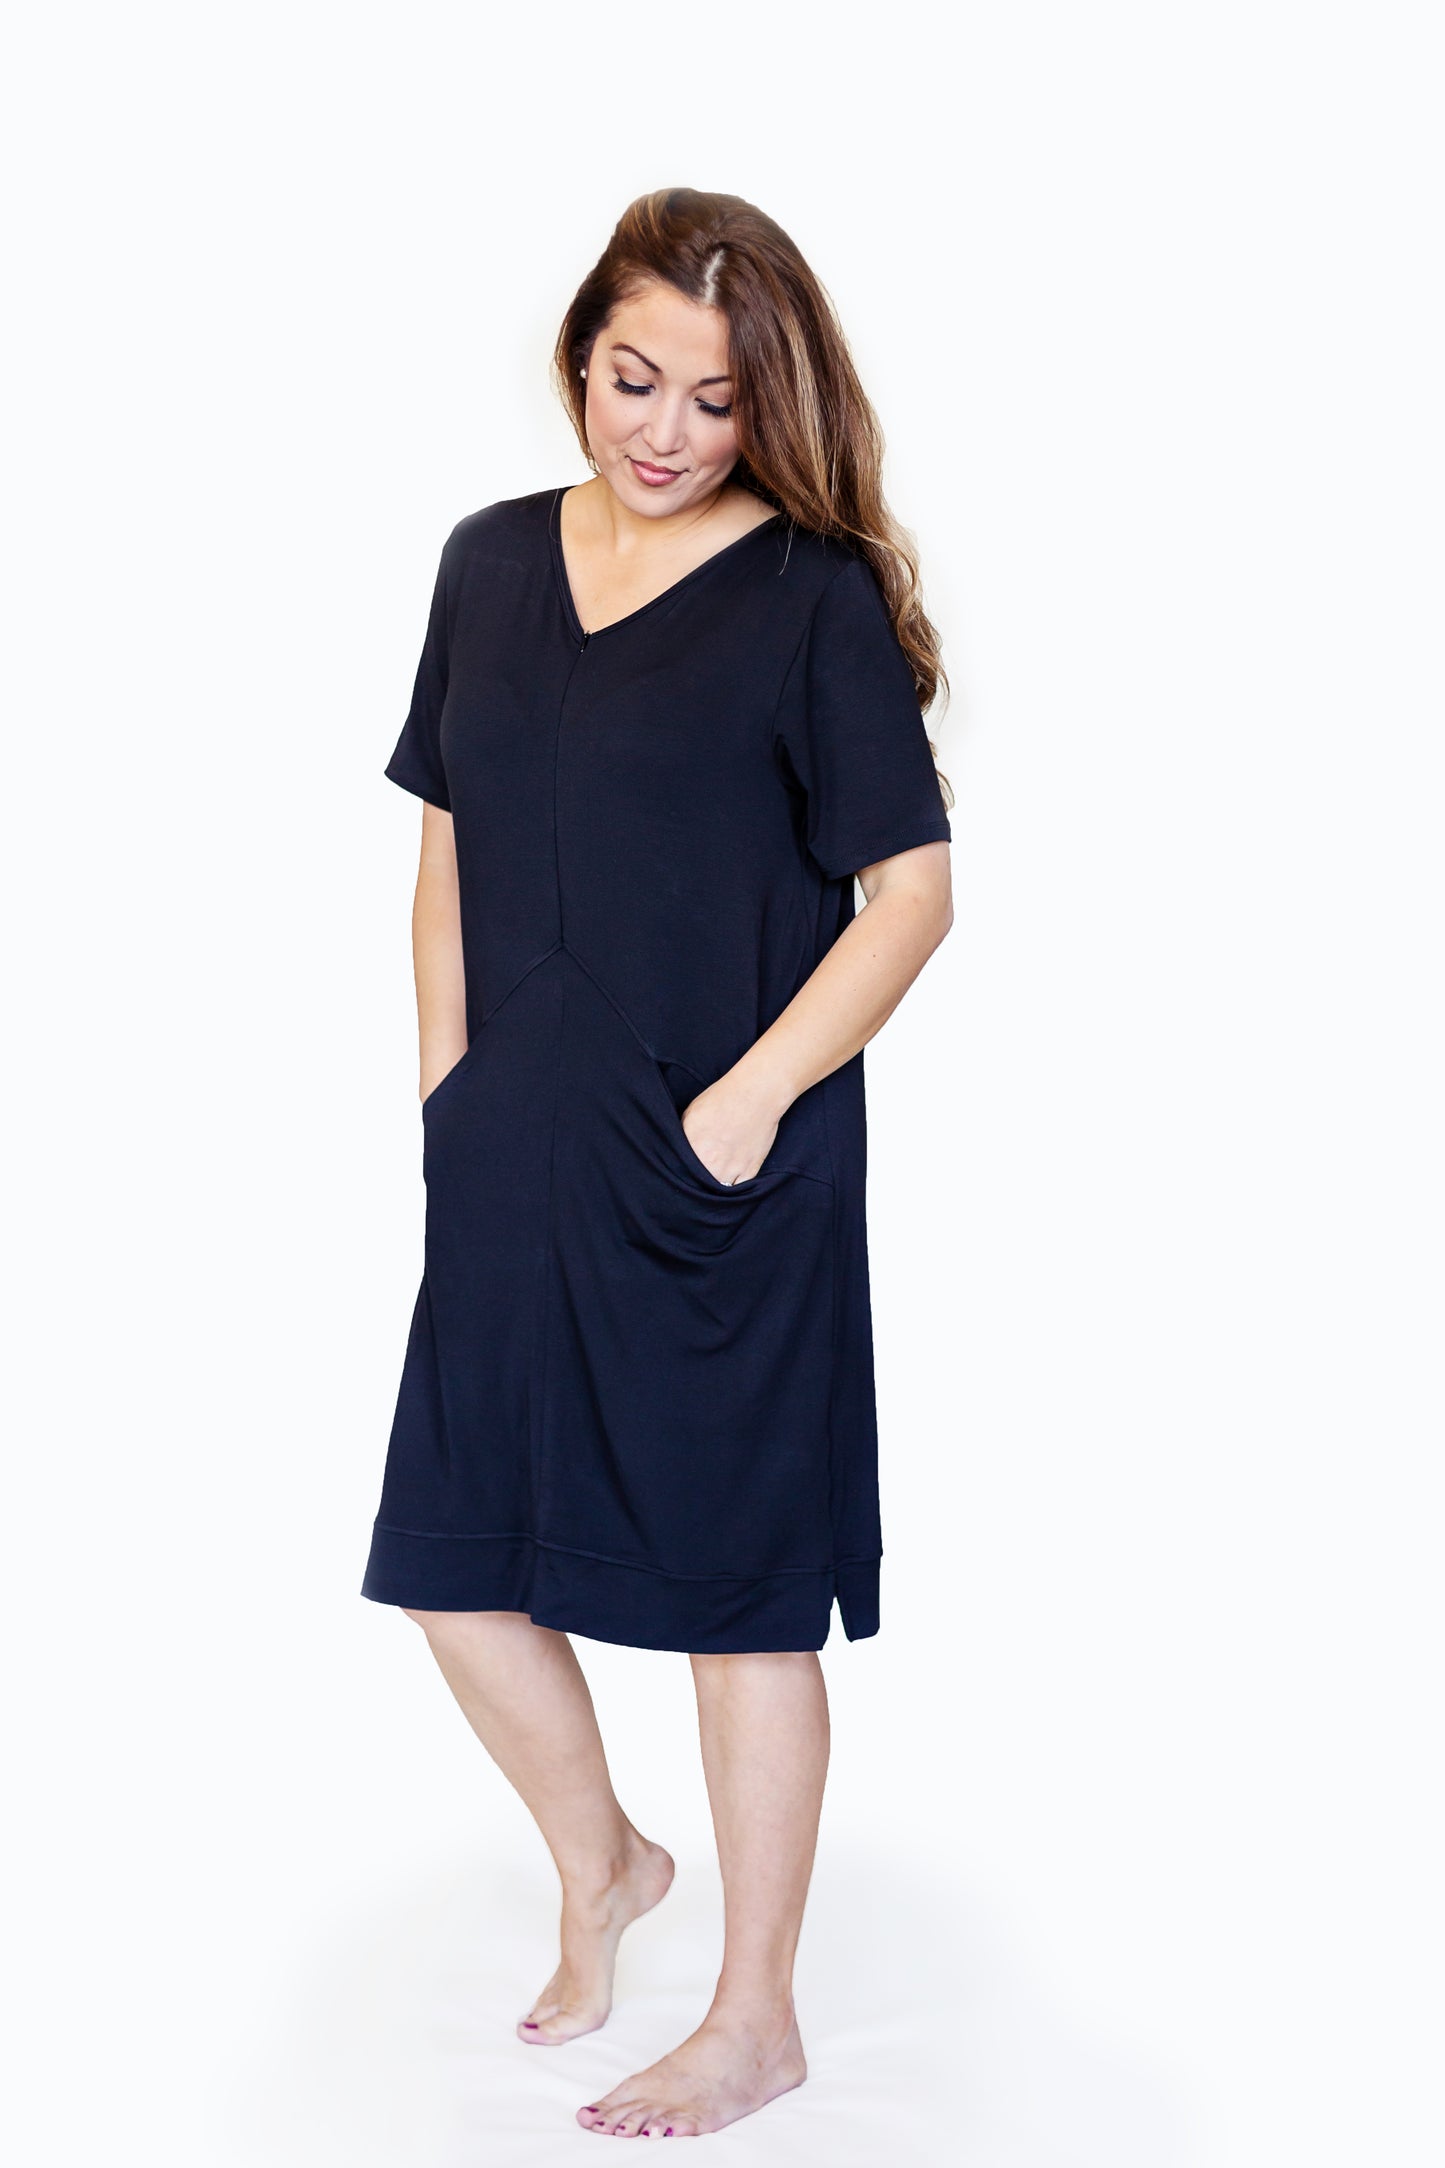 Lounge Dress with Pockets. Deep zipper. Micromodal dress in black. Skin-to-skin and nursing friendly dress. 